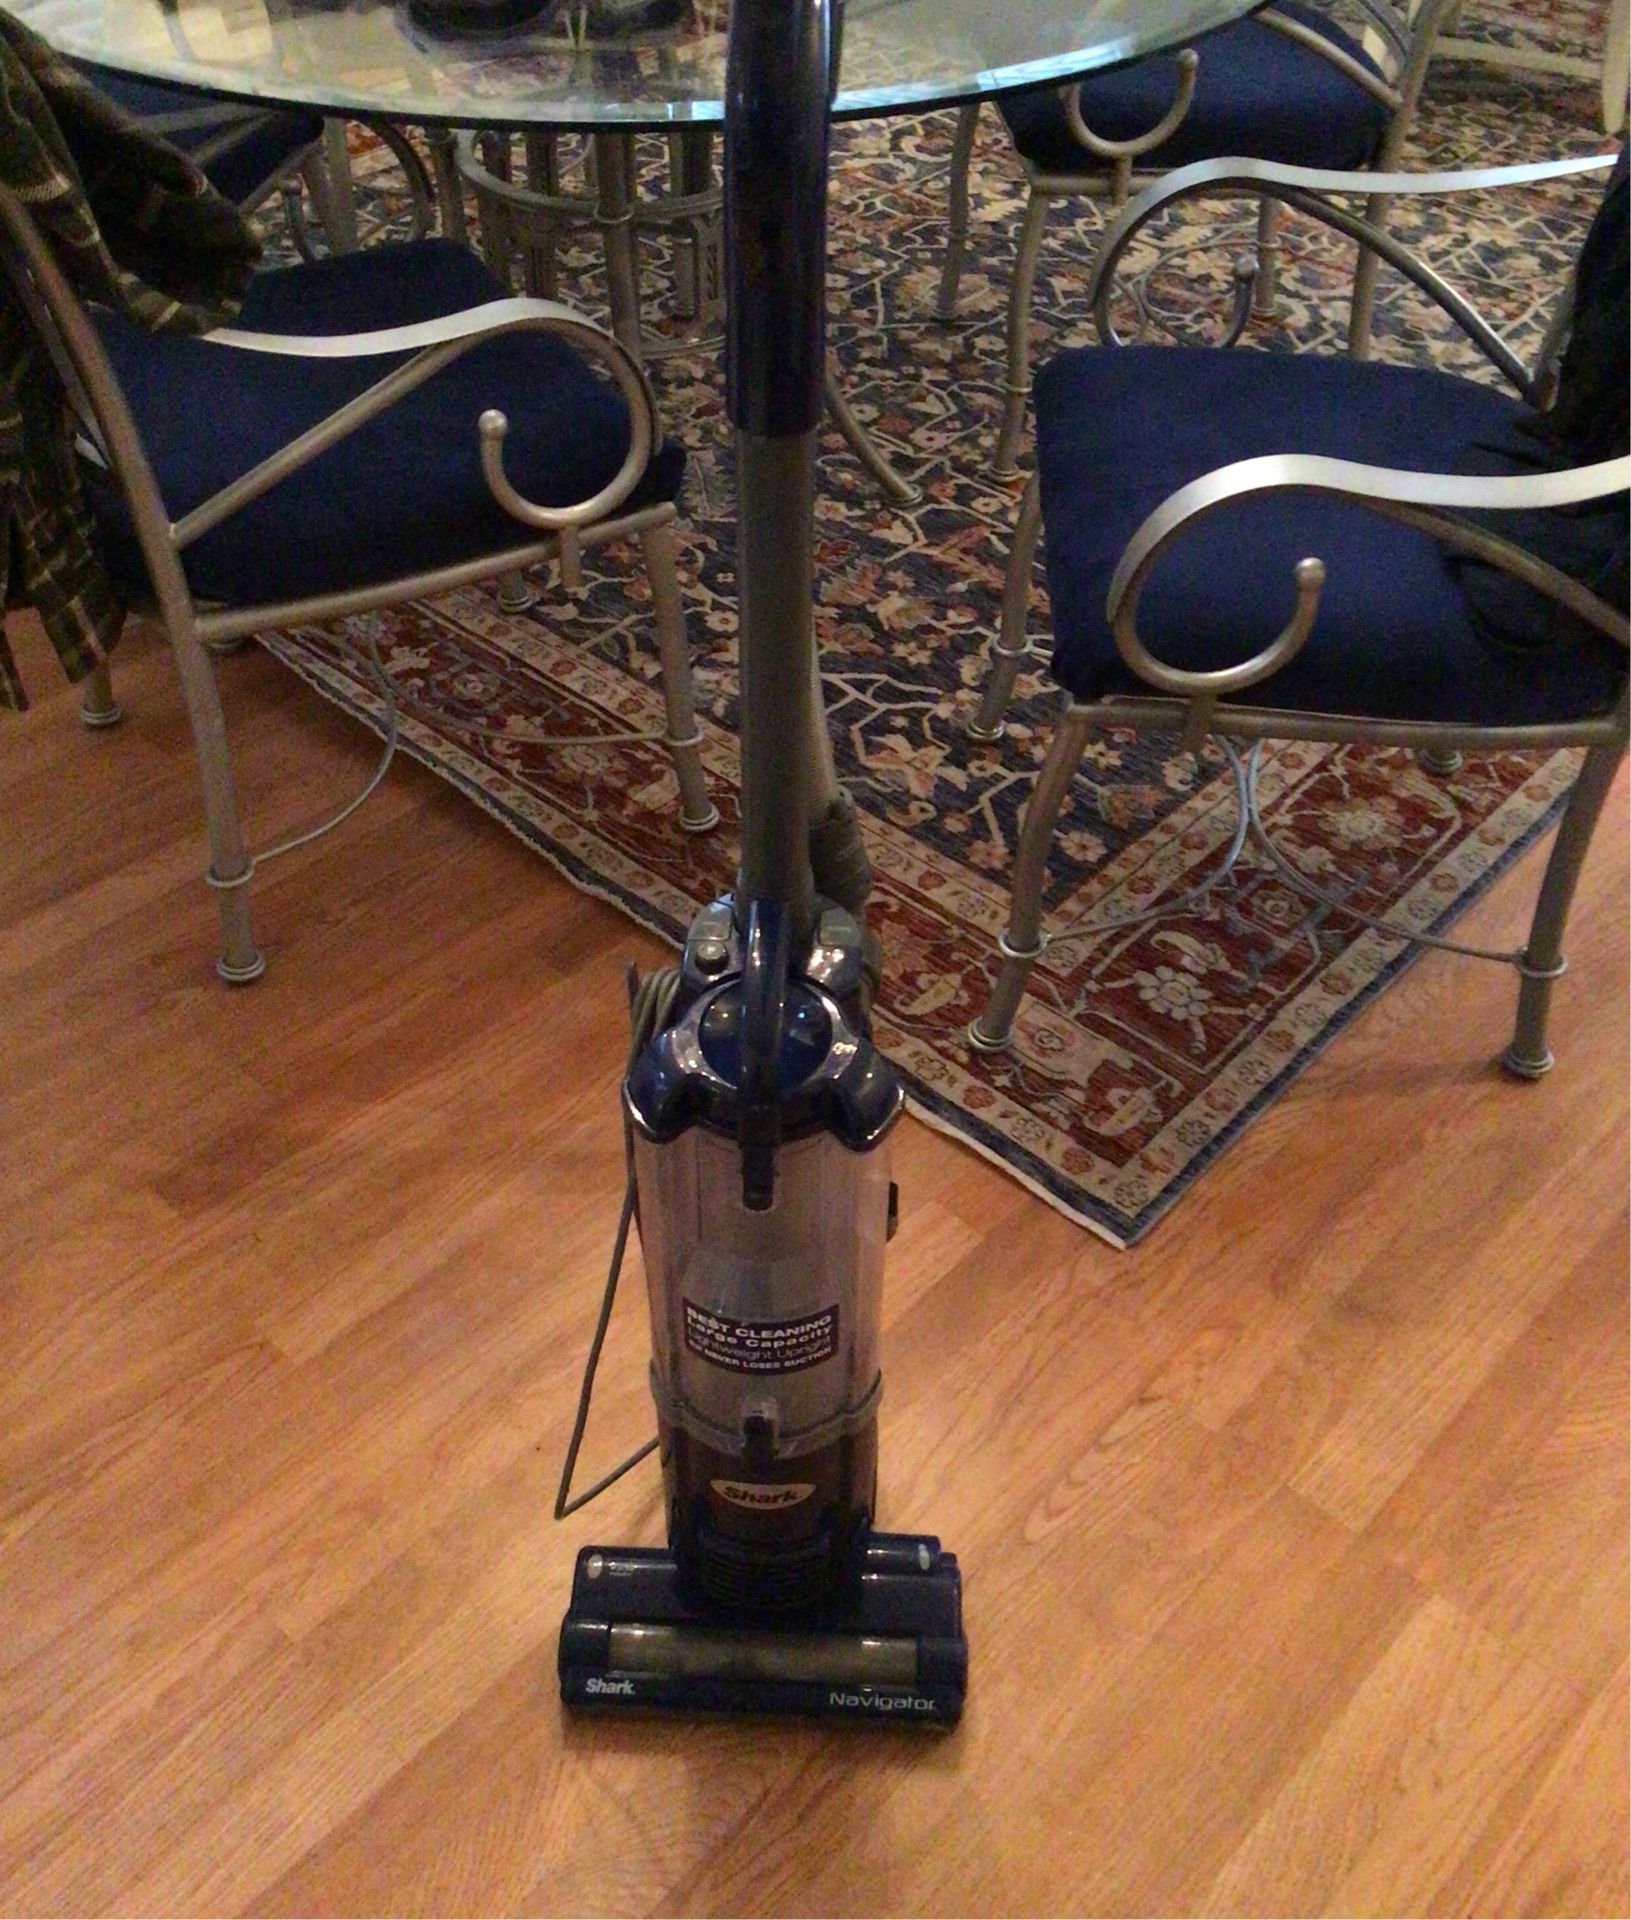 Shark vacuum cleaner works perfect